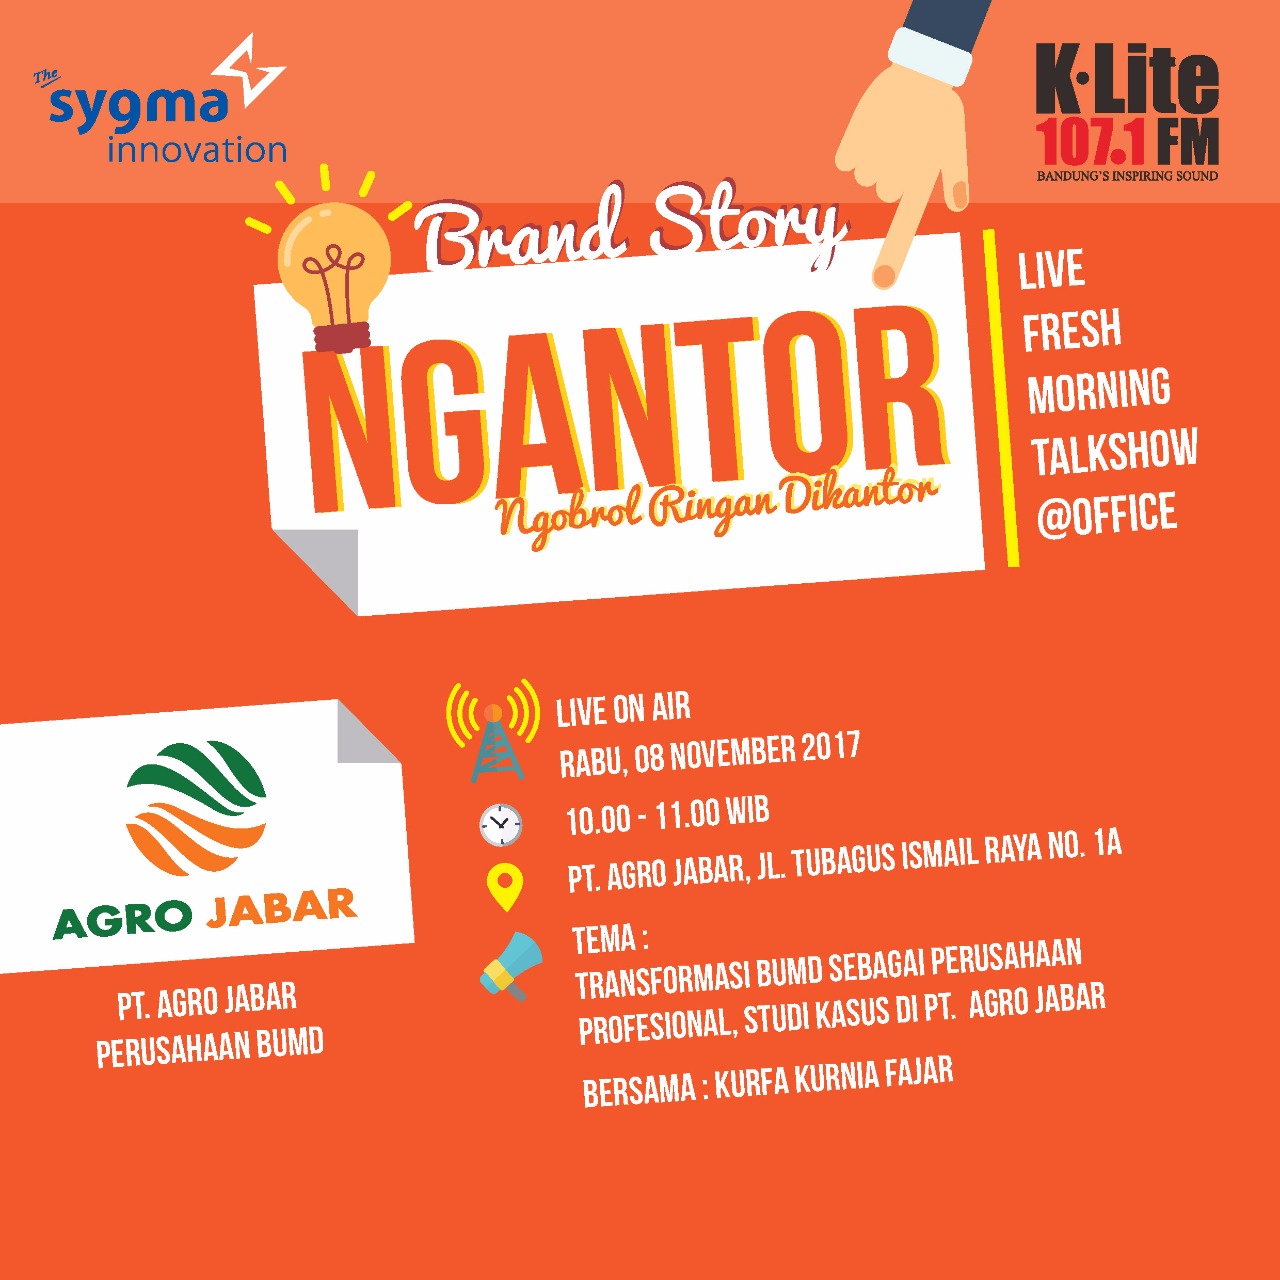 Edisi Ngantor Sygma Innovation Bersama K-Lite FM di Agro Jabar